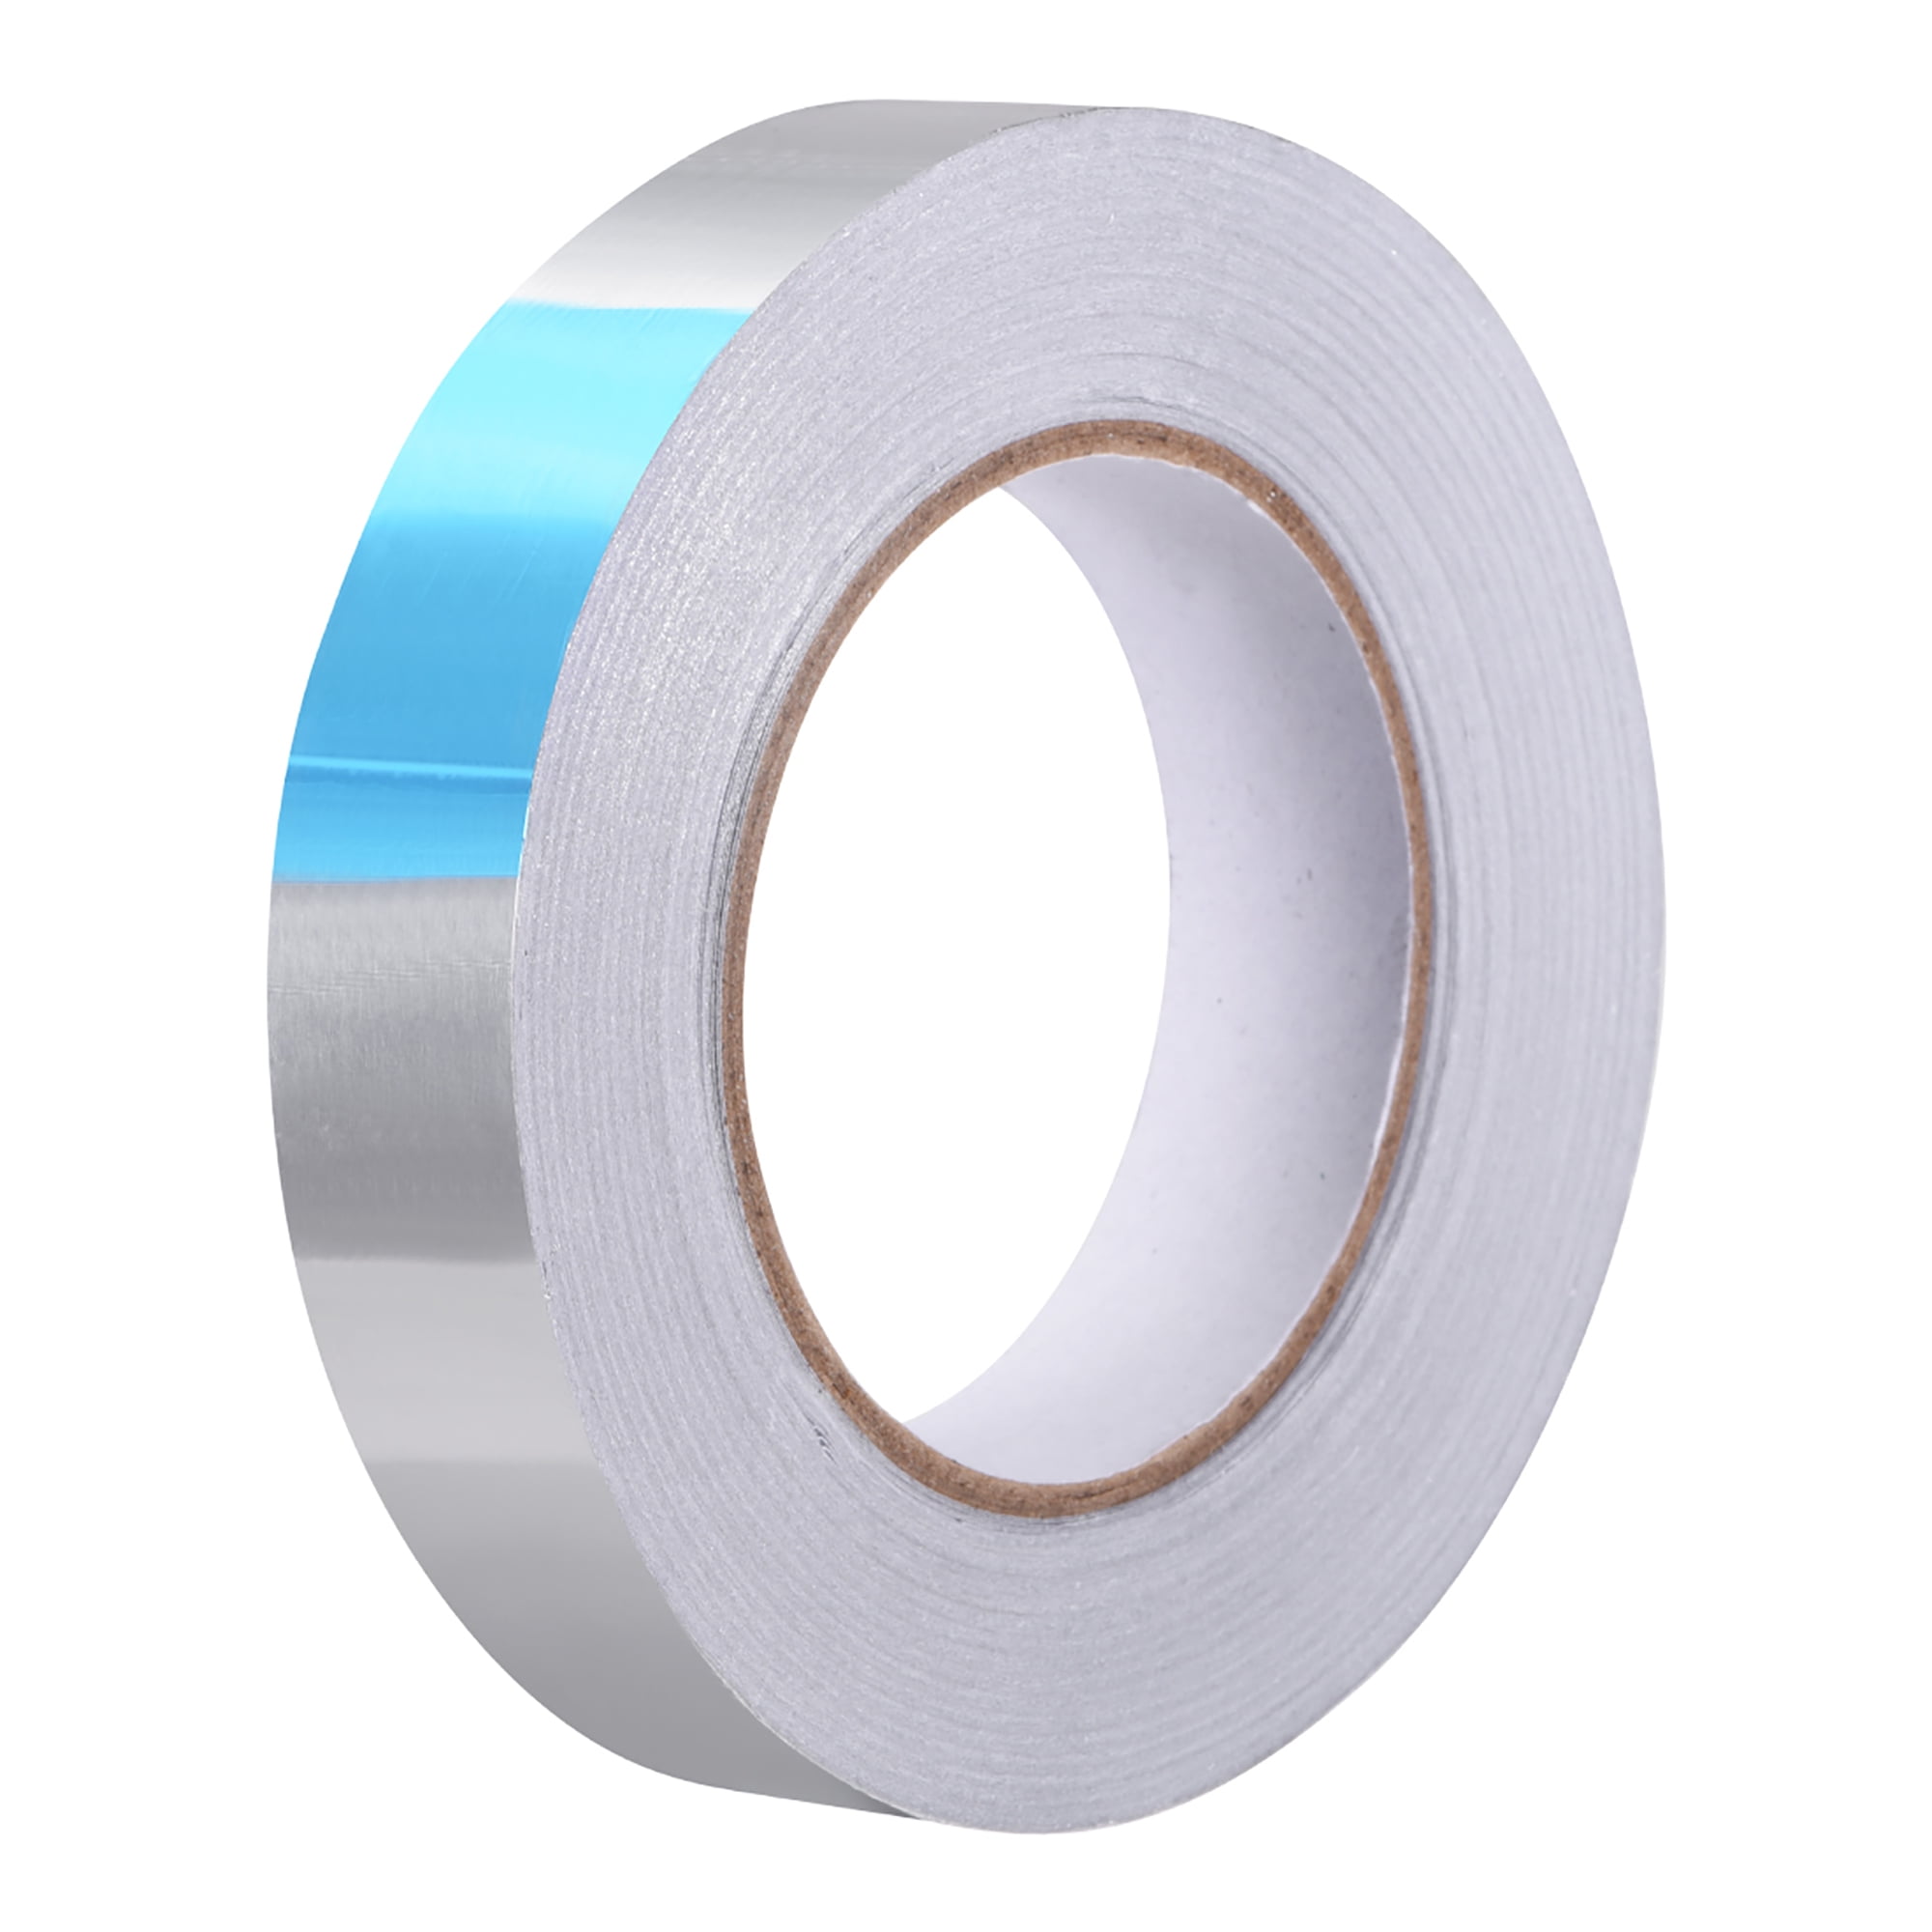 Heat Resistant Tape - High Temperature Heat Transfer Tape Aluminum Foil  Adhesive Tape 55mm x 20m(66ft) 